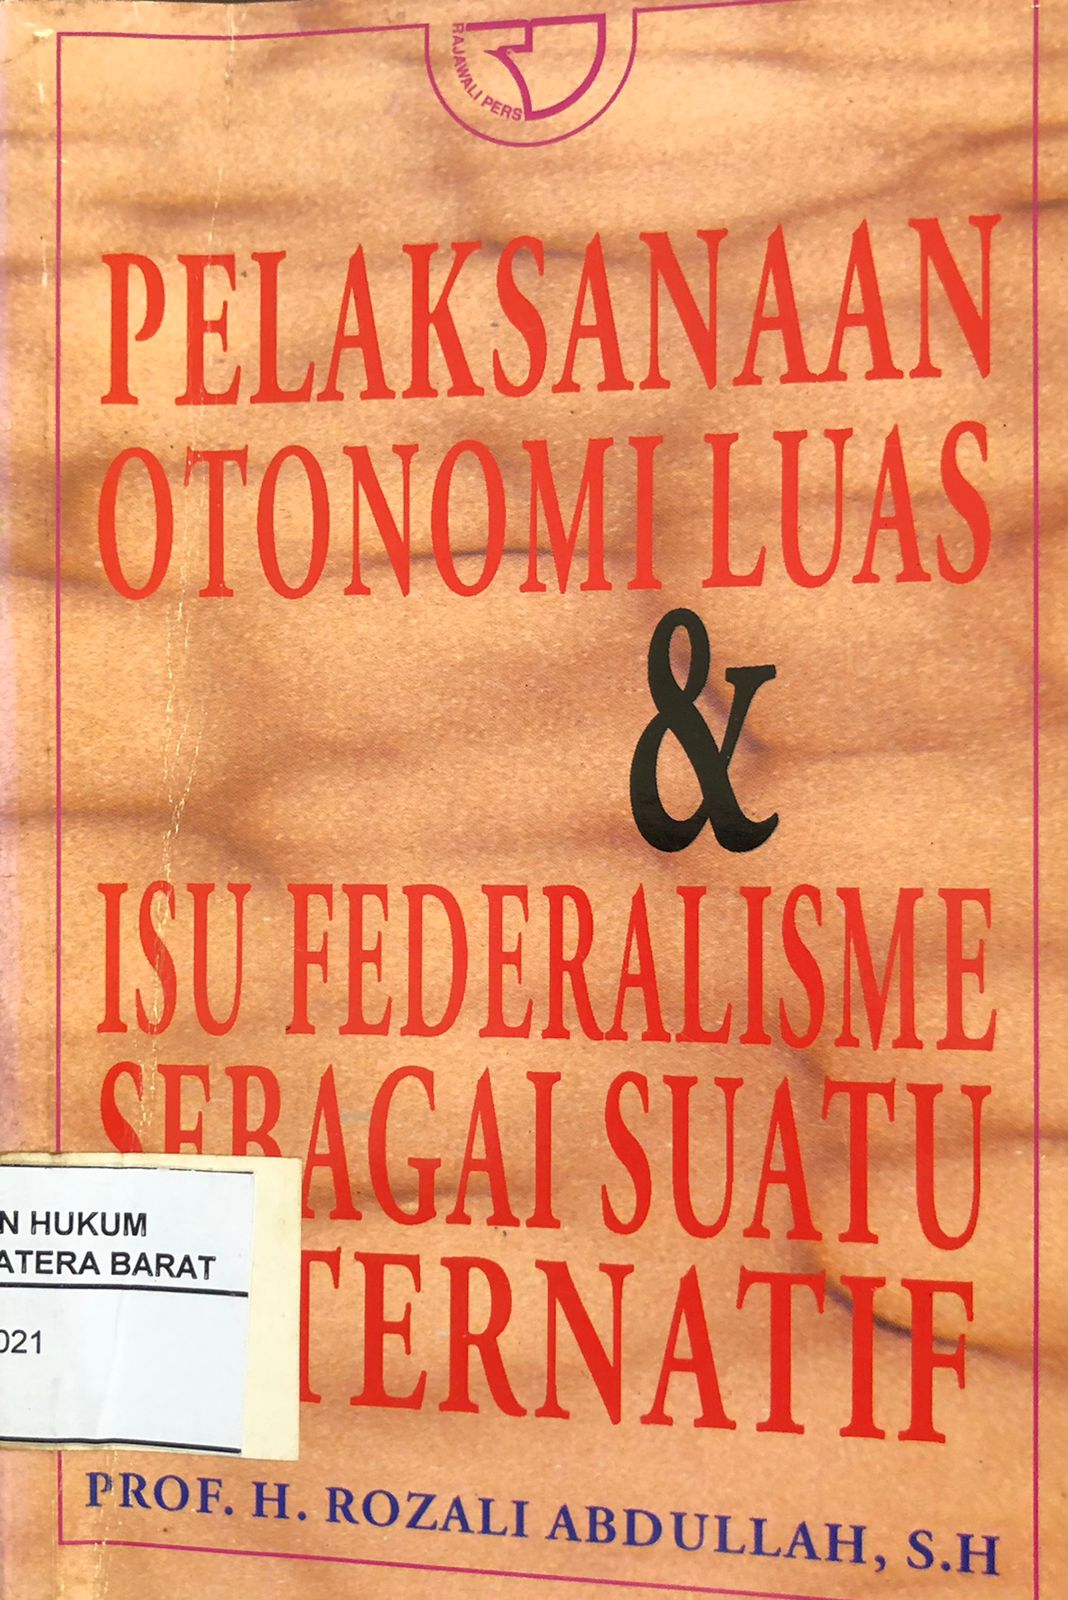 Pelaksanaan Otonomi Luas dan Isu Federalisme Sebagai Suatu Alternatif